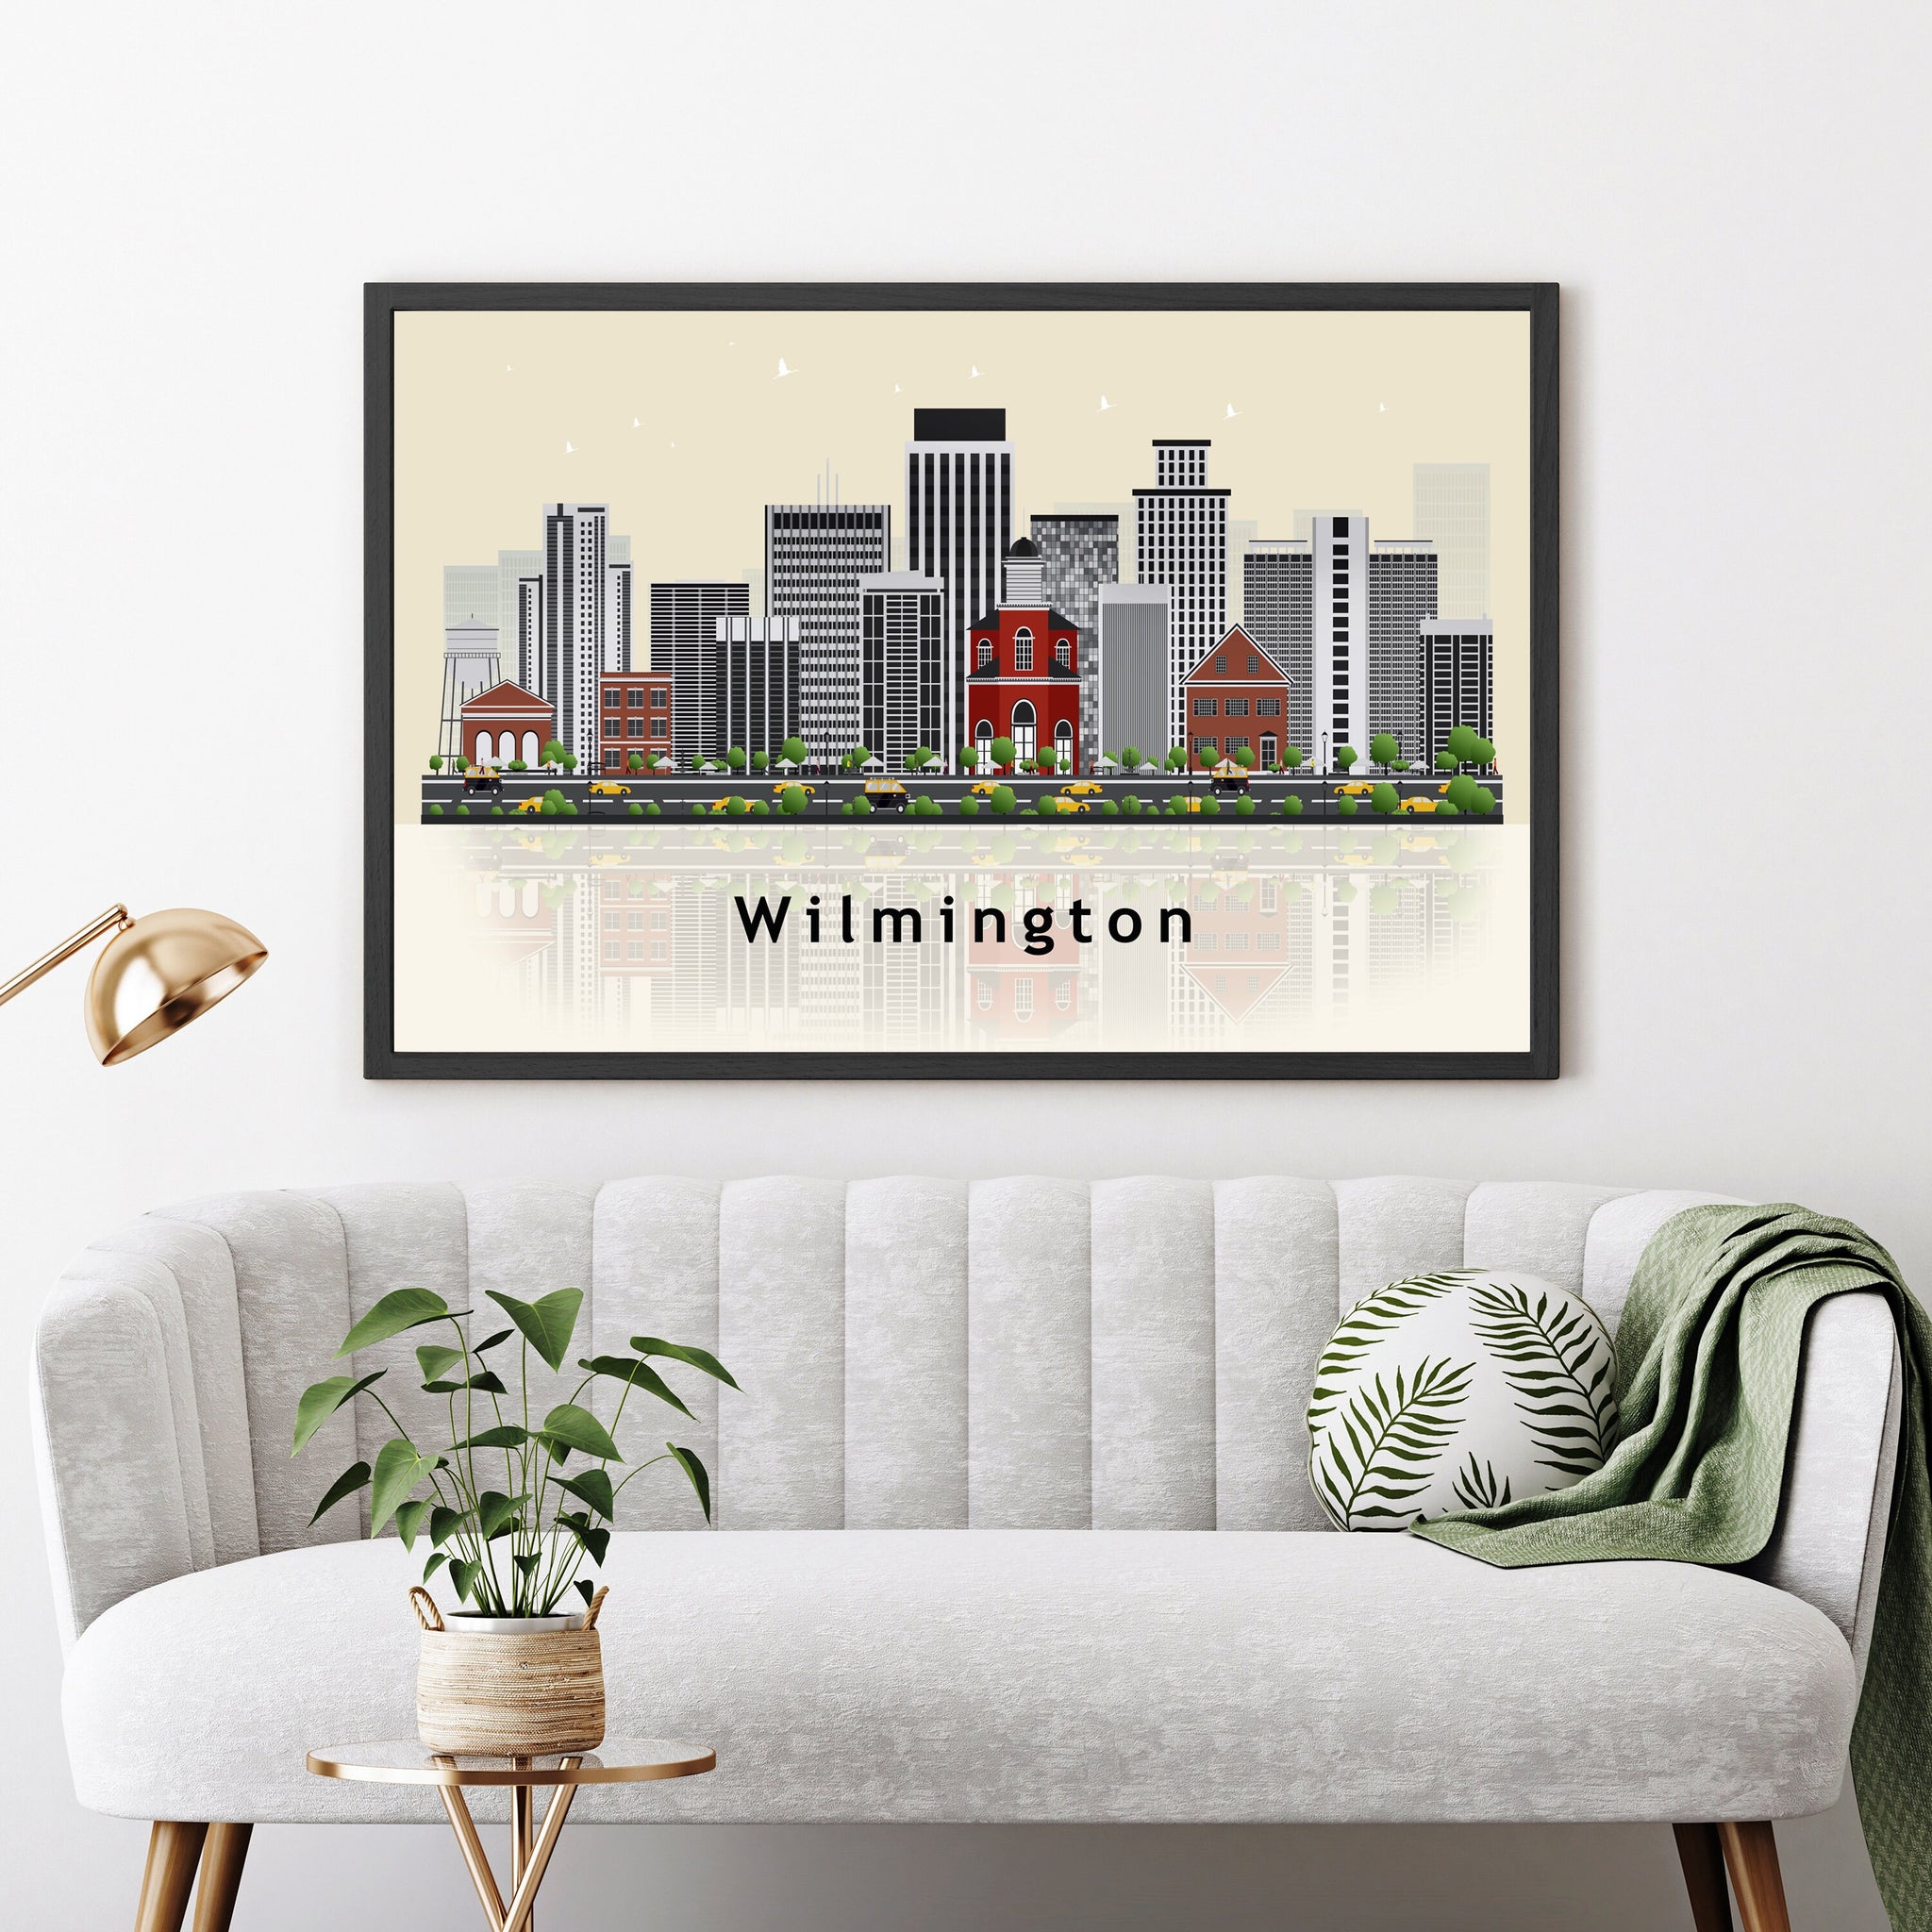 WILMINGTON NORTH CAROLINA Illustration skyline poster, Modern skyline cityscape poster print, Landmark map poster, Home wall art decoration